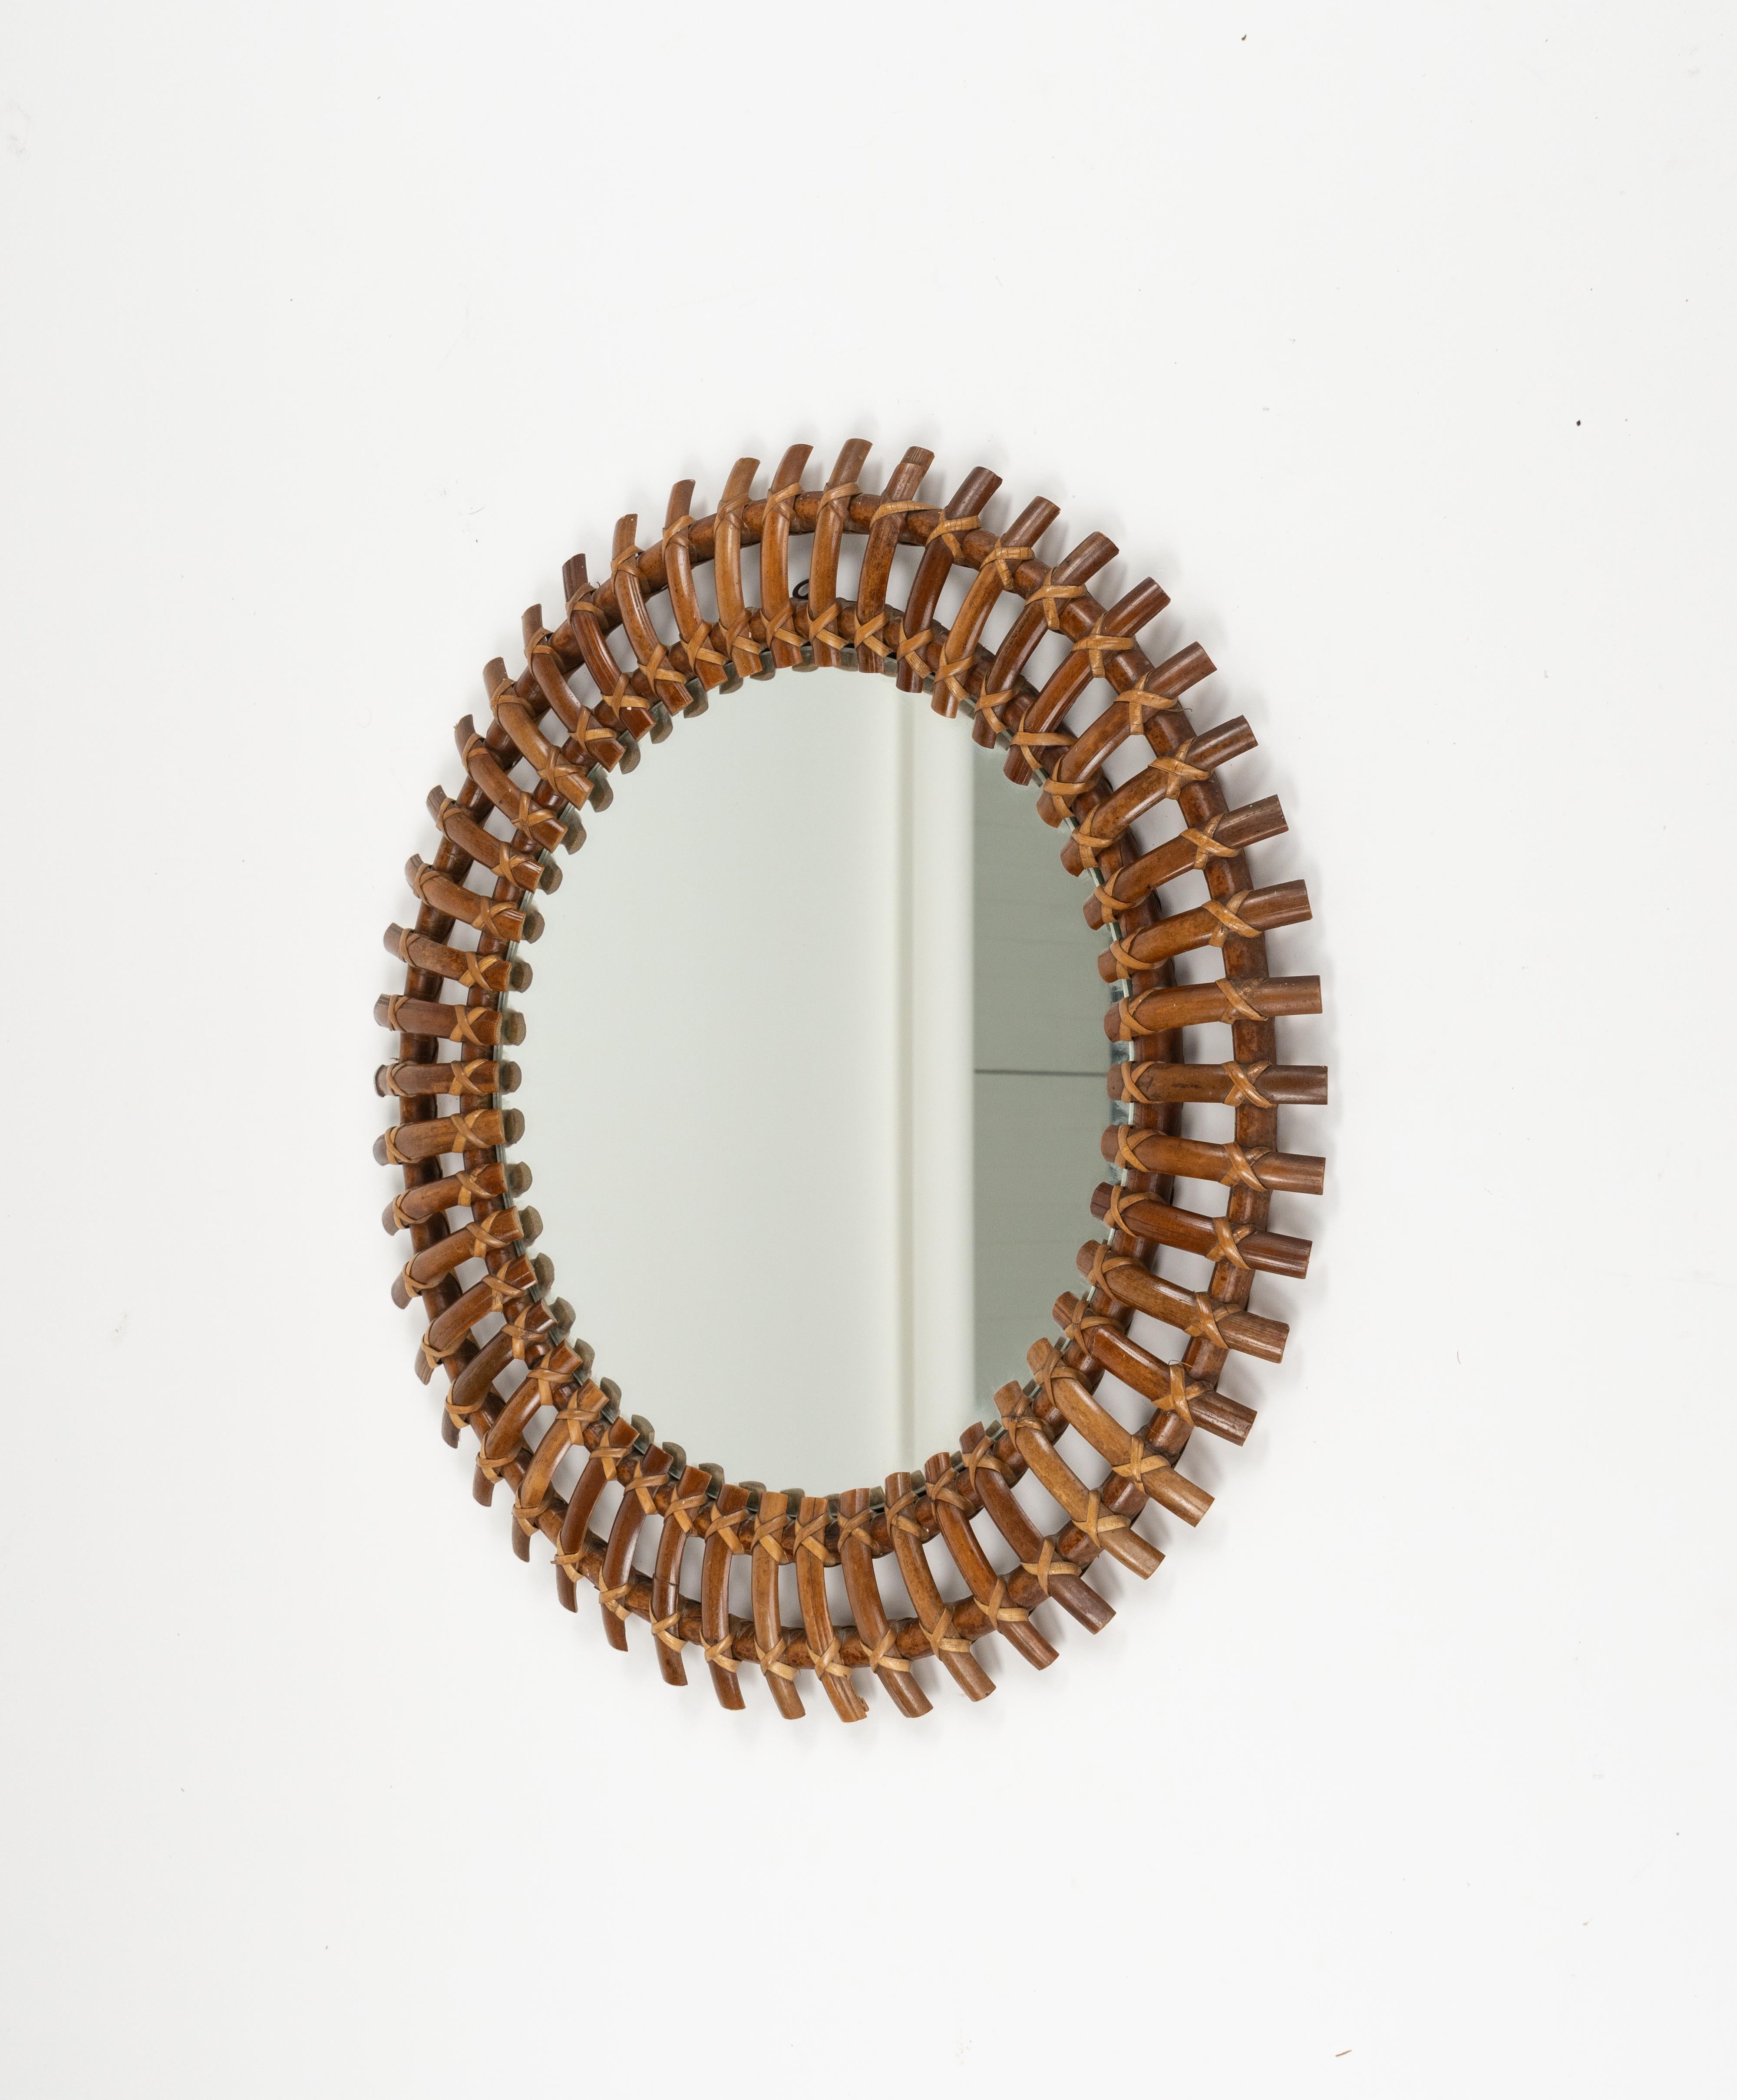 Midcentury Rattan & Bamboo Sunburst Round Wall Mirror, Italy, 1960s For Sale 3